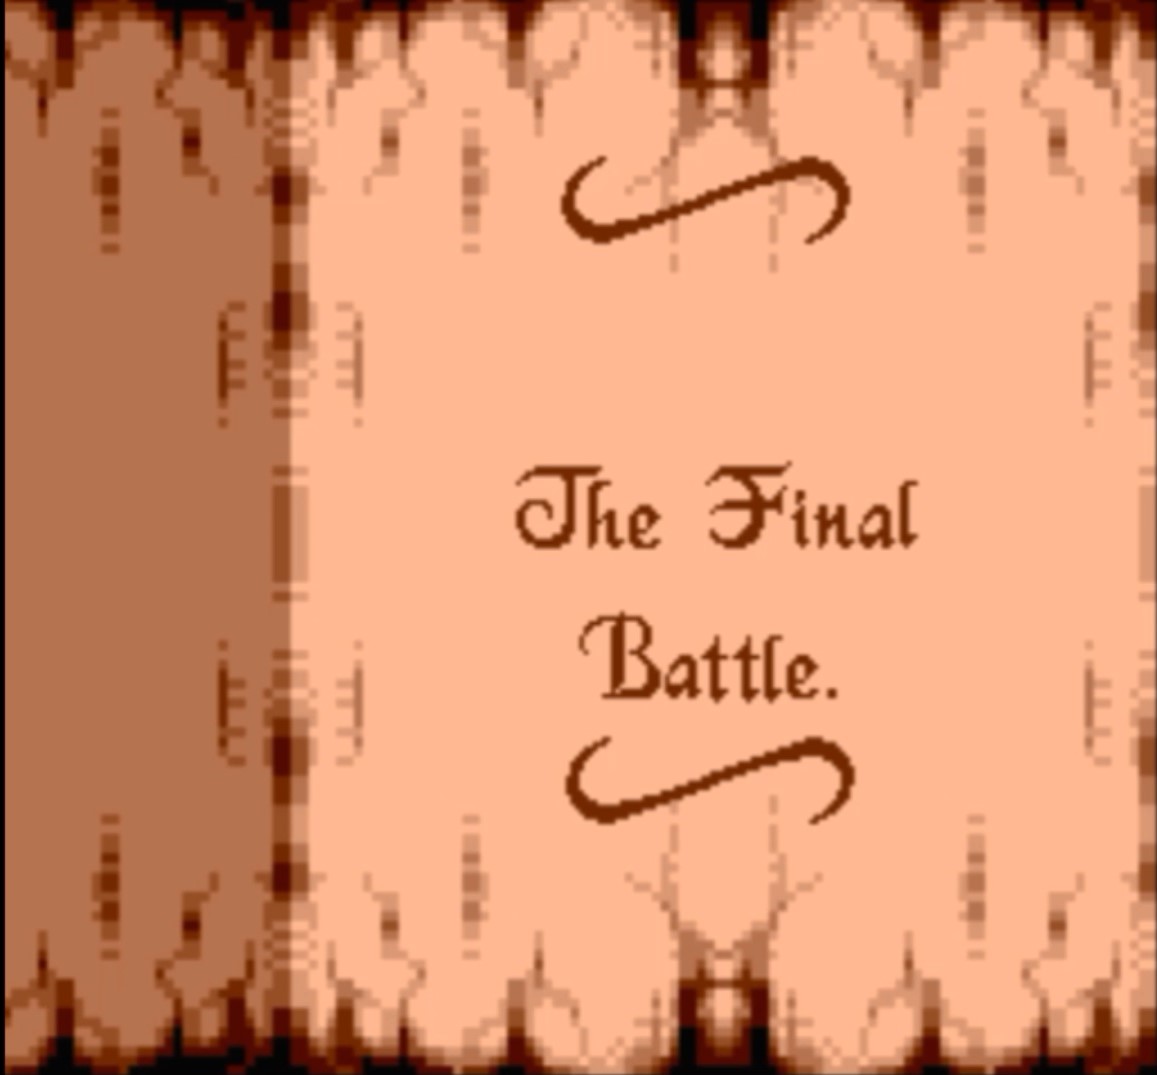 Sega Mega Drive 2 (Smd) 16-bit Bram Stoker's Dracula Level 6 The Final Battle Прохождение